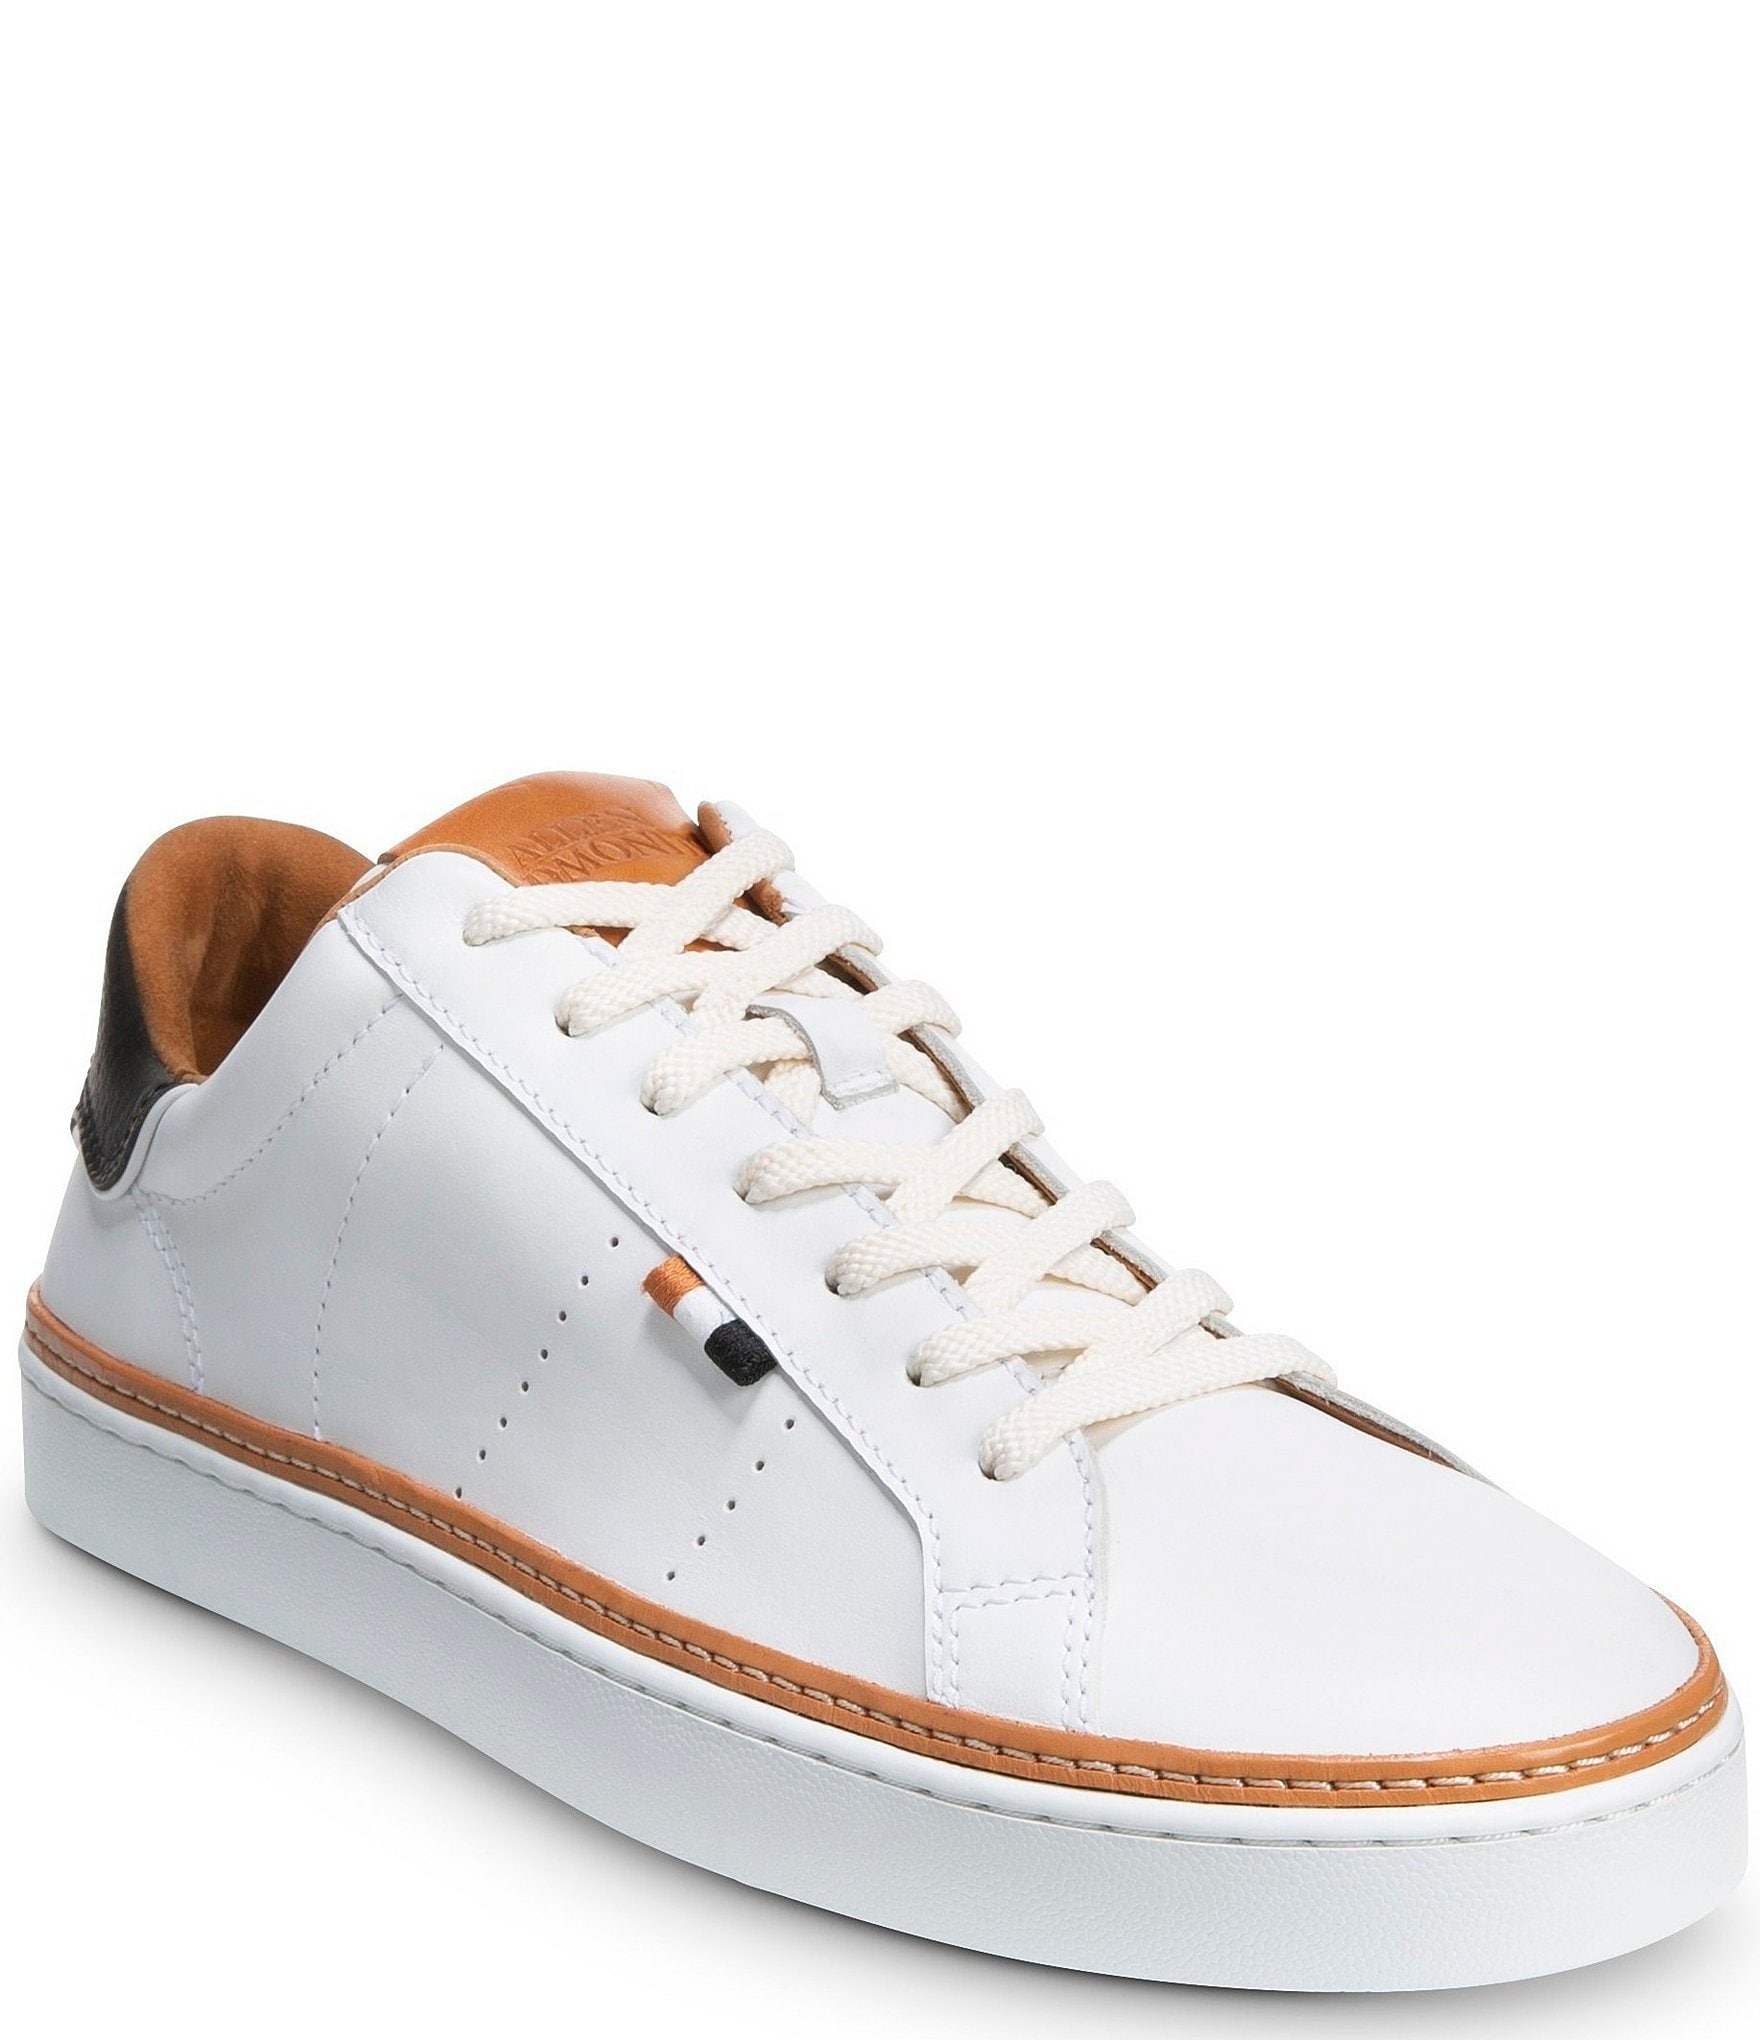 Allen Edmonds Men's Sneaker Care Kit Shoe in Black/White